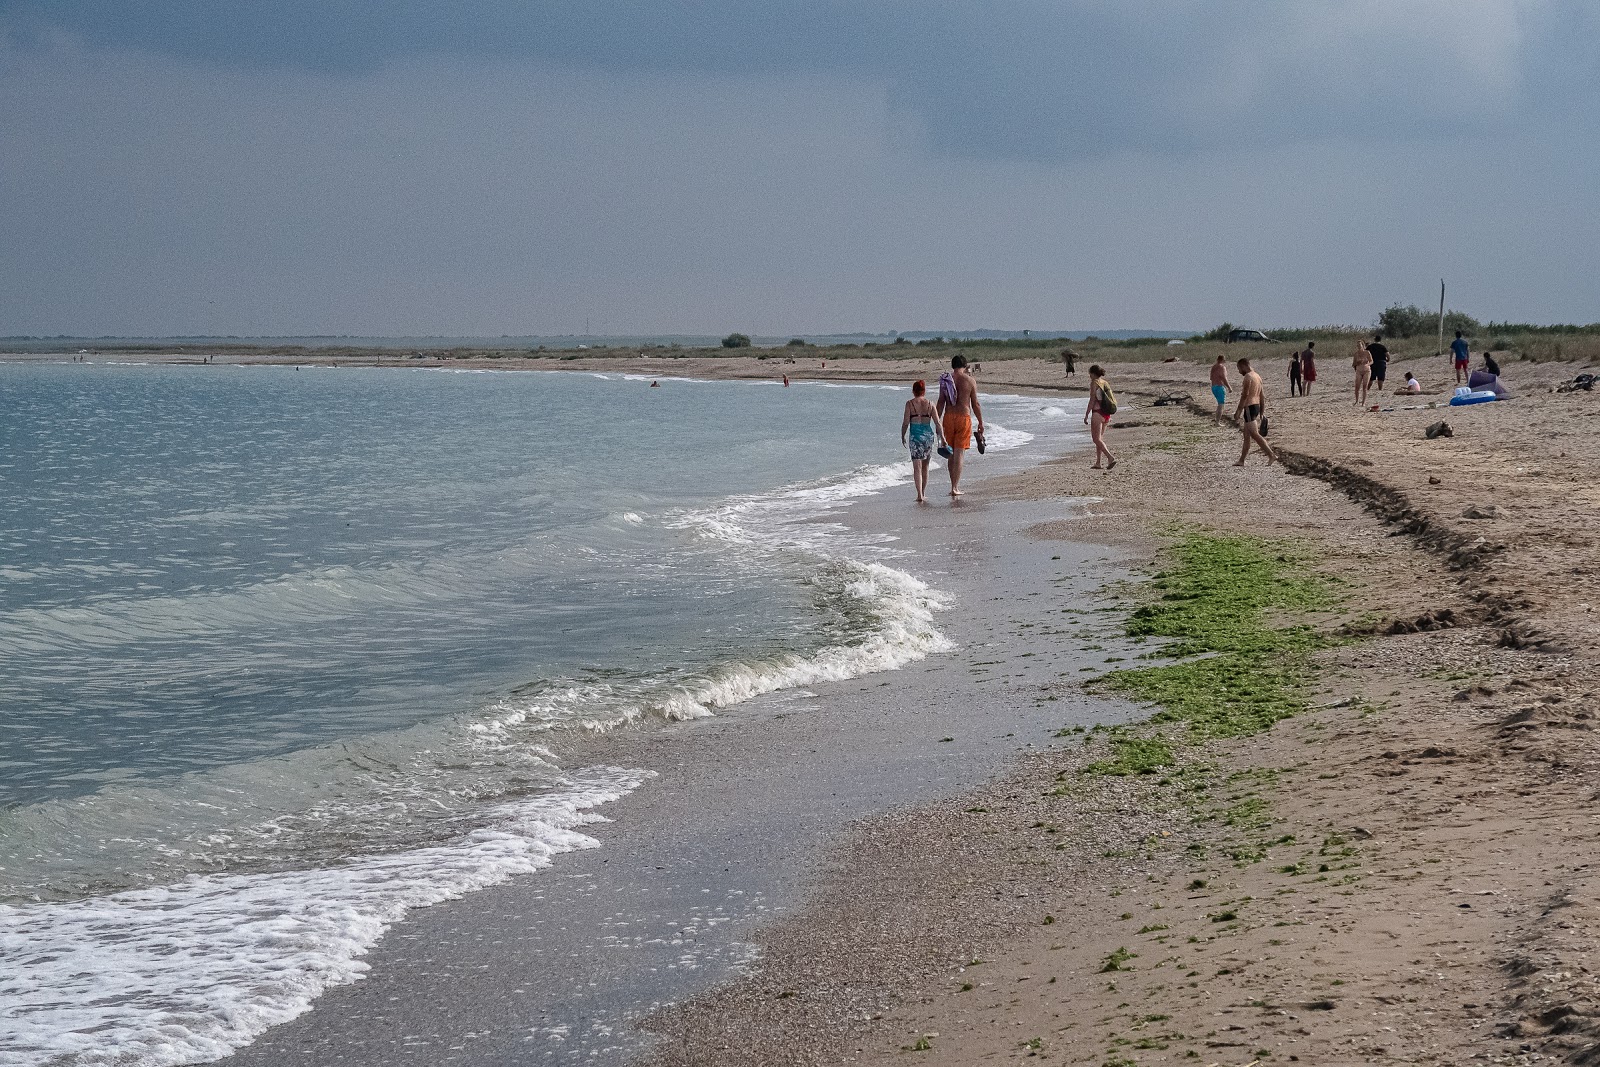 Foto di Durankulak beach ubicato in zona naturale